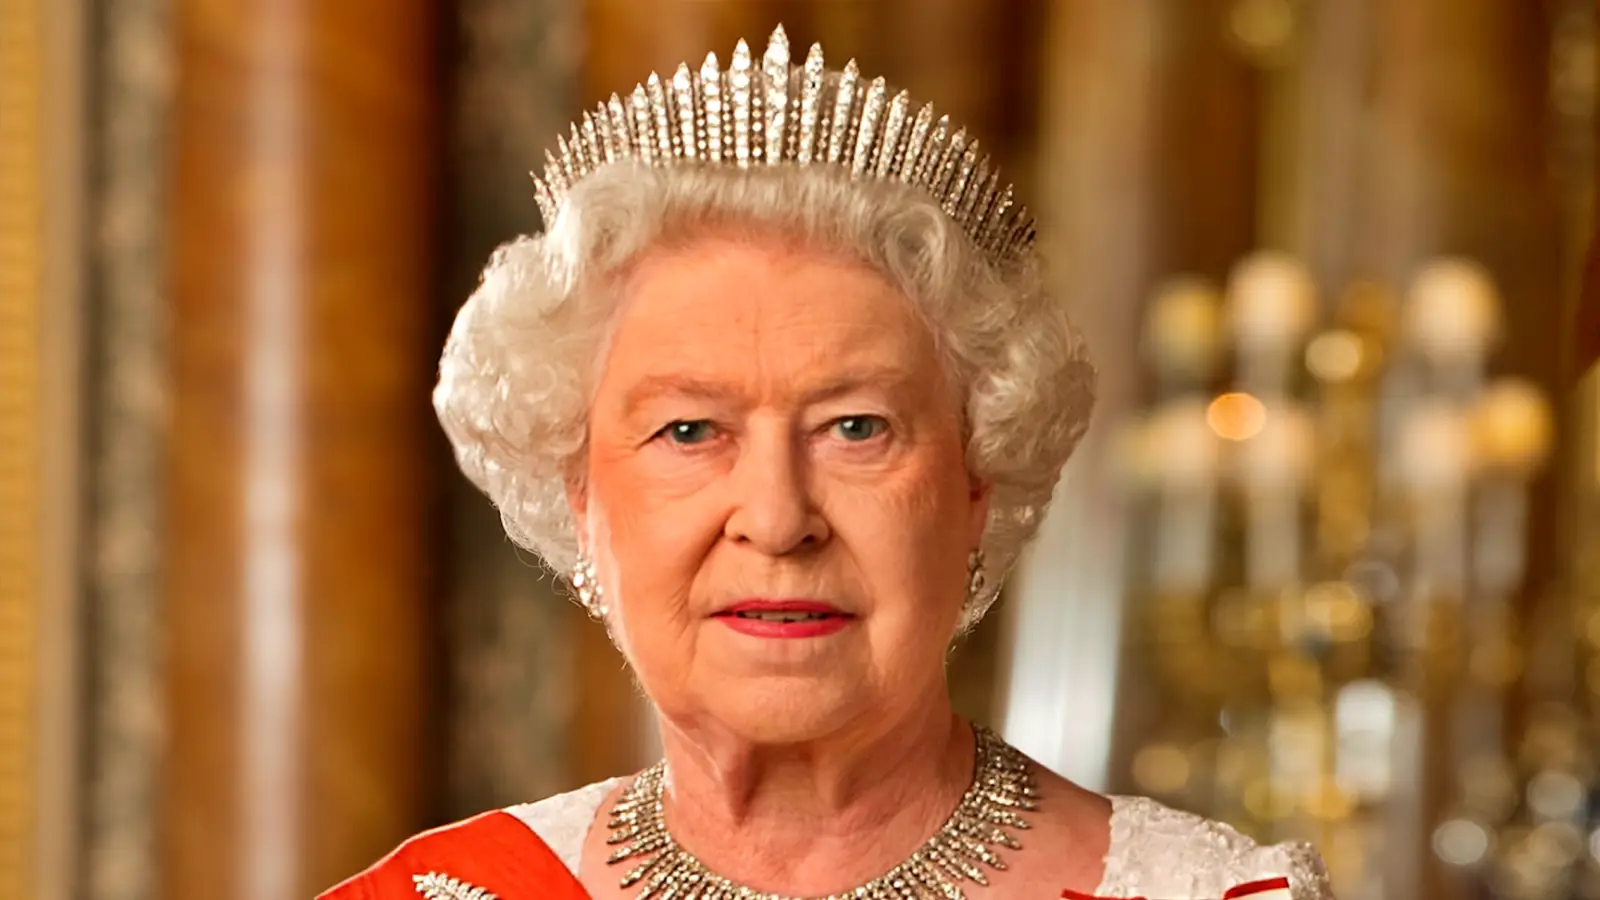 Koningin Elizabeth II Overleden Charles III, koning van Groot-Brittannië